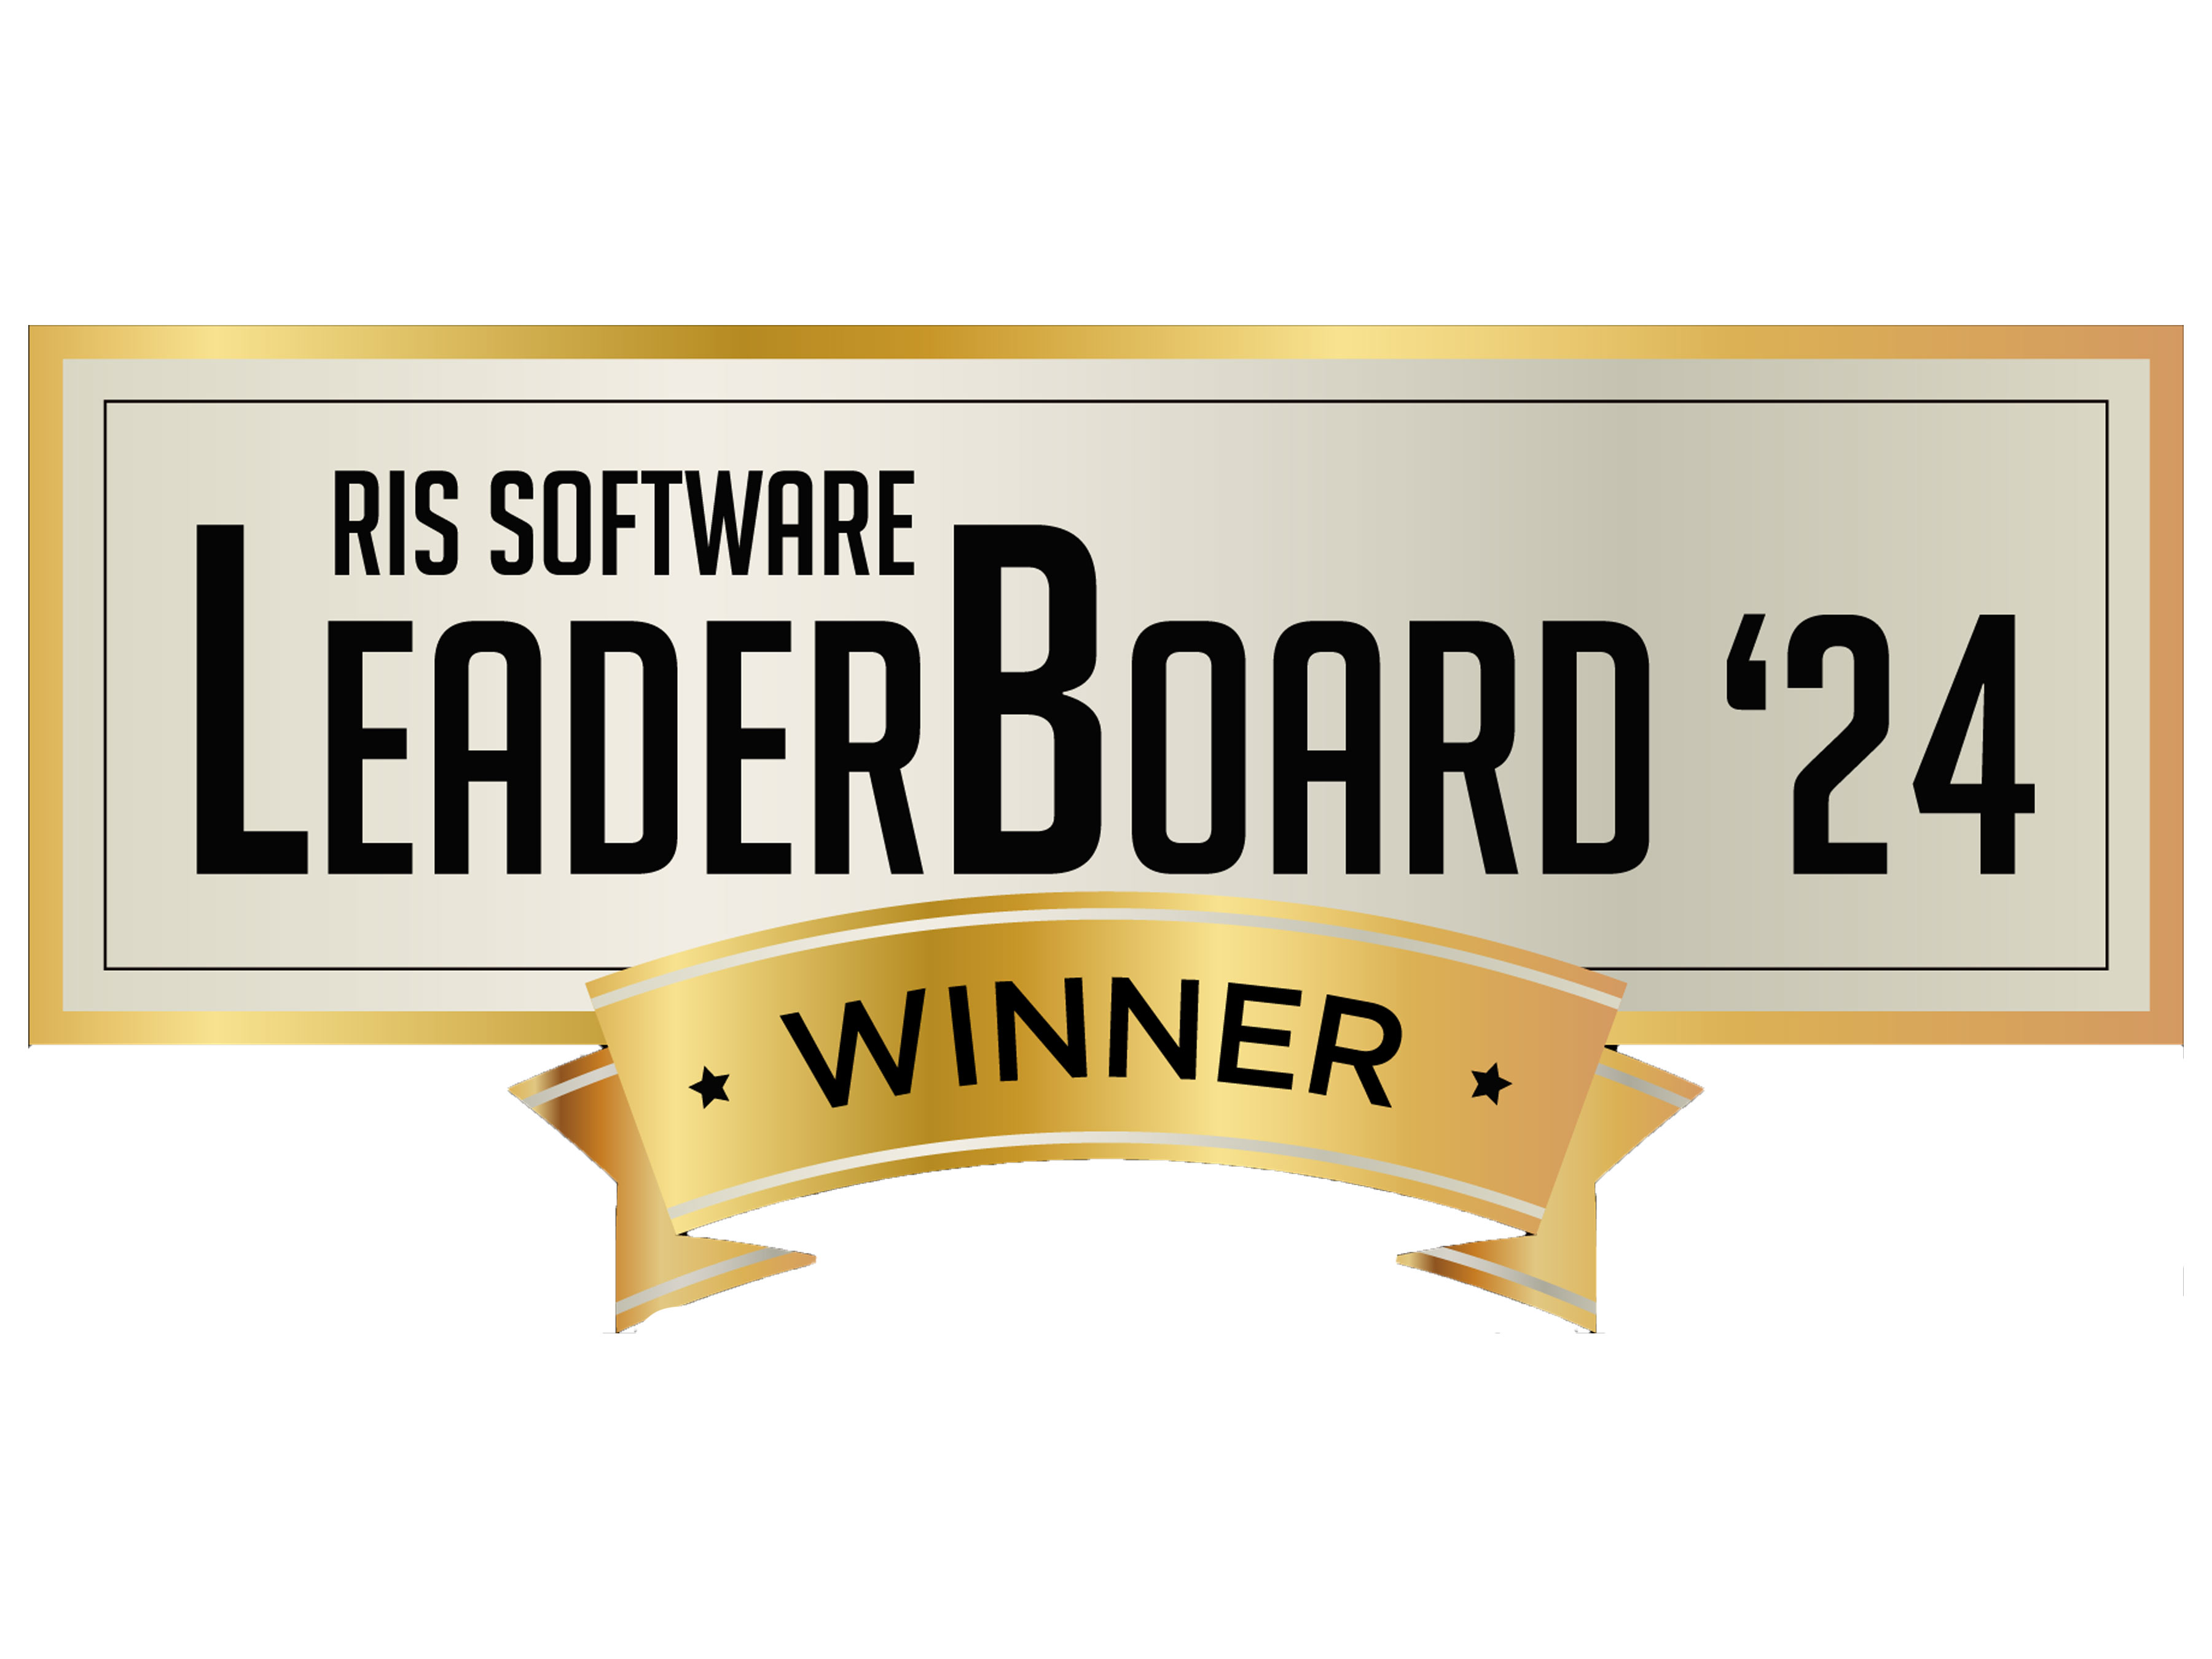 Top Software Vendor in 2024 RIS Software LeaderBoard image